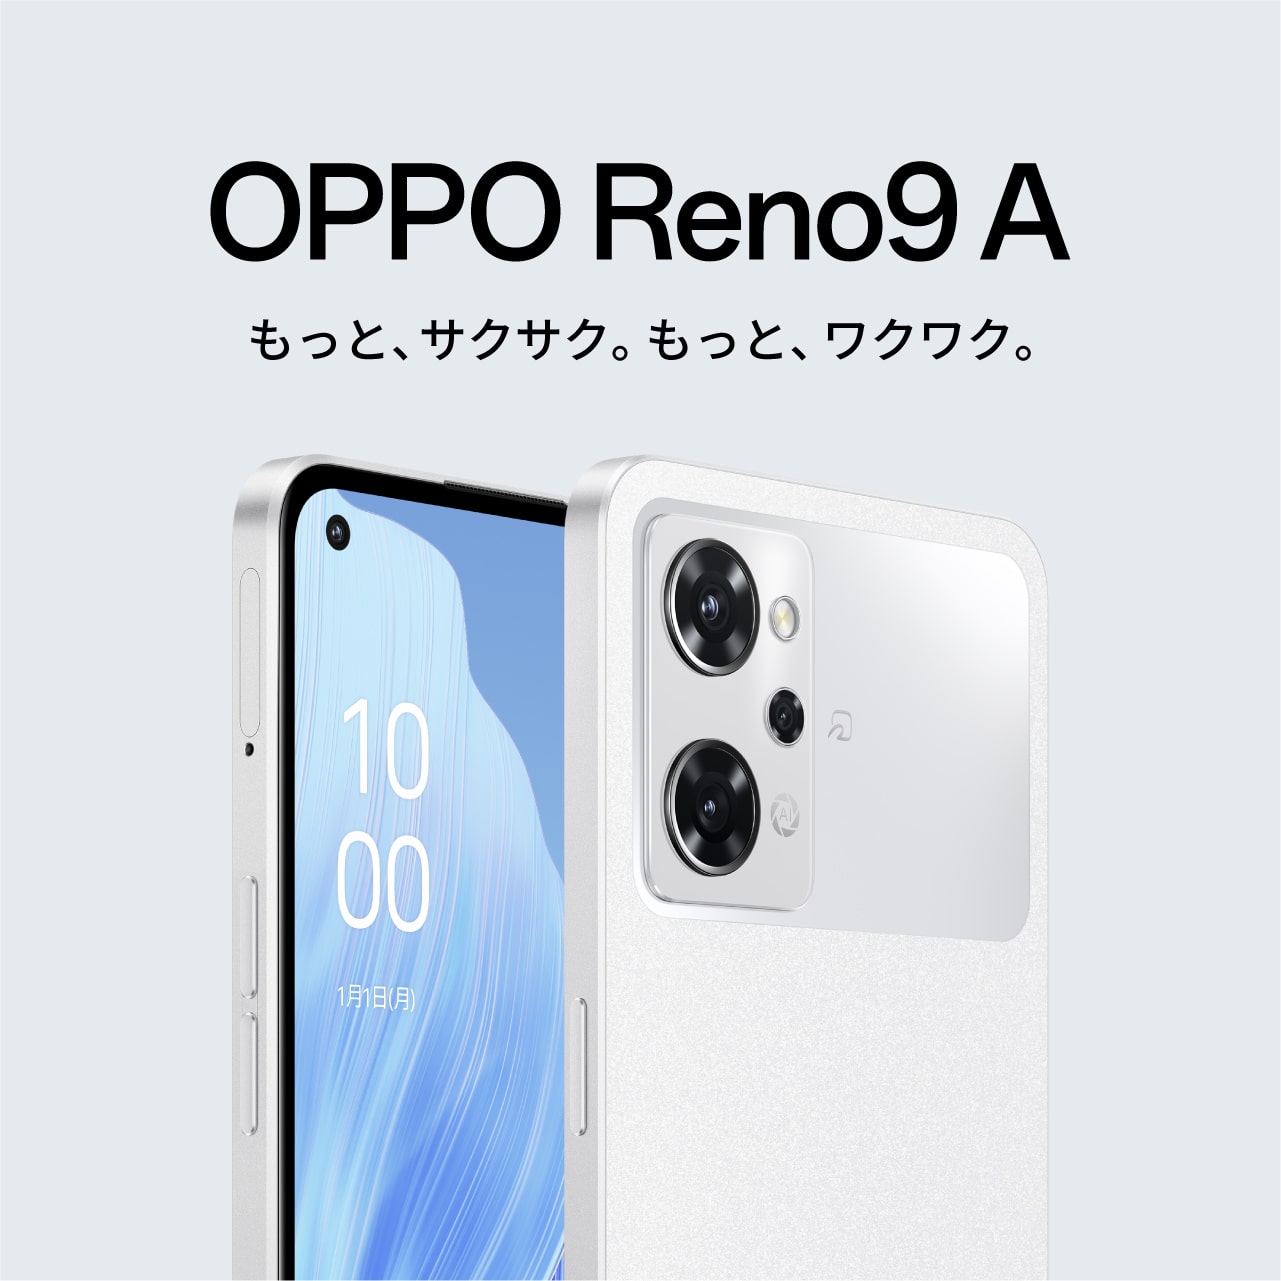 OPPO Reno9 A ムーンホワイト 128 GB - 携帯電話